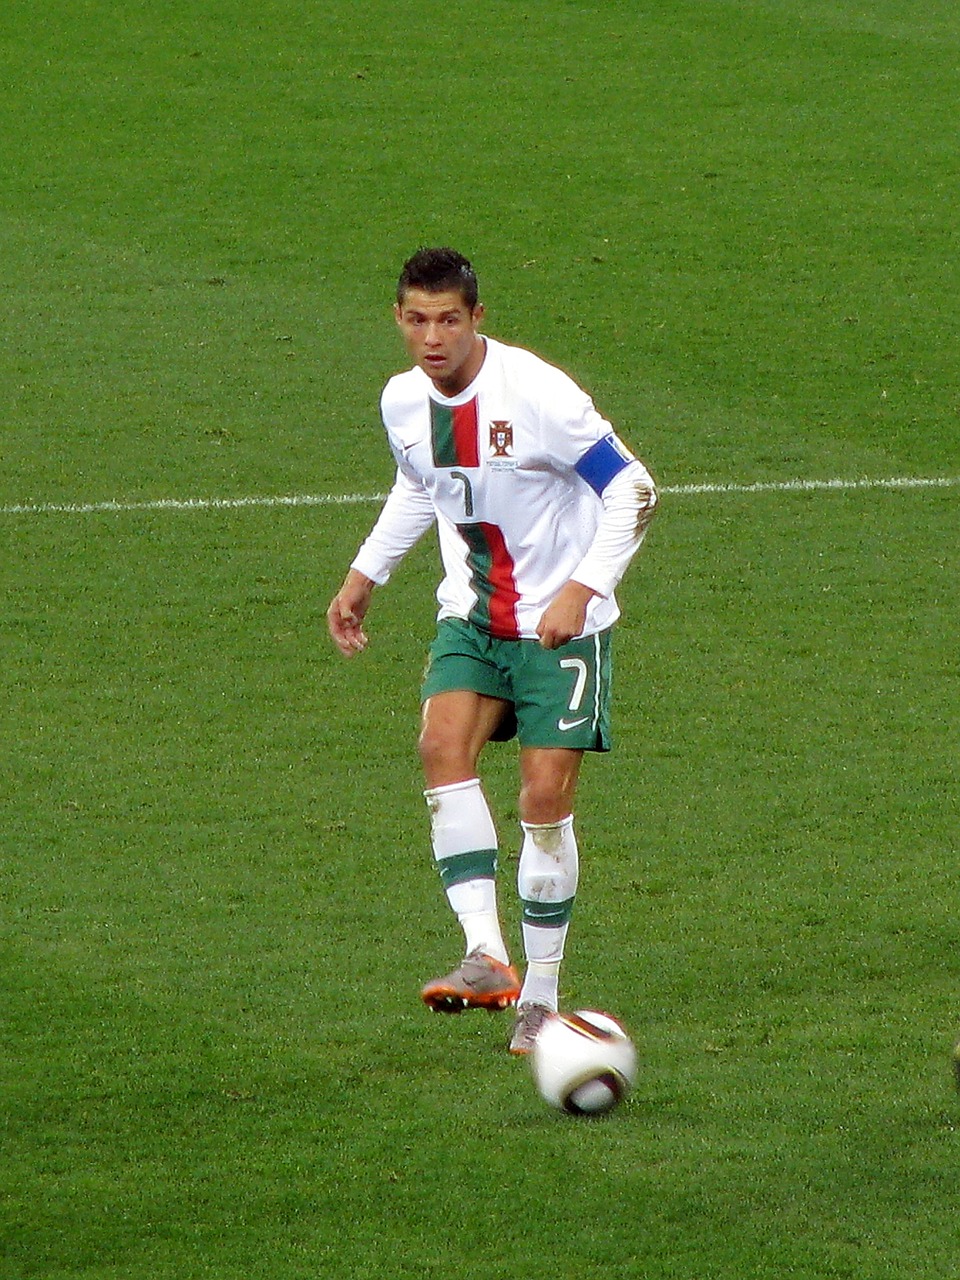 Cristiano ronaldo,world cup 2010,portugal,football,soccer - free image from needpix.com